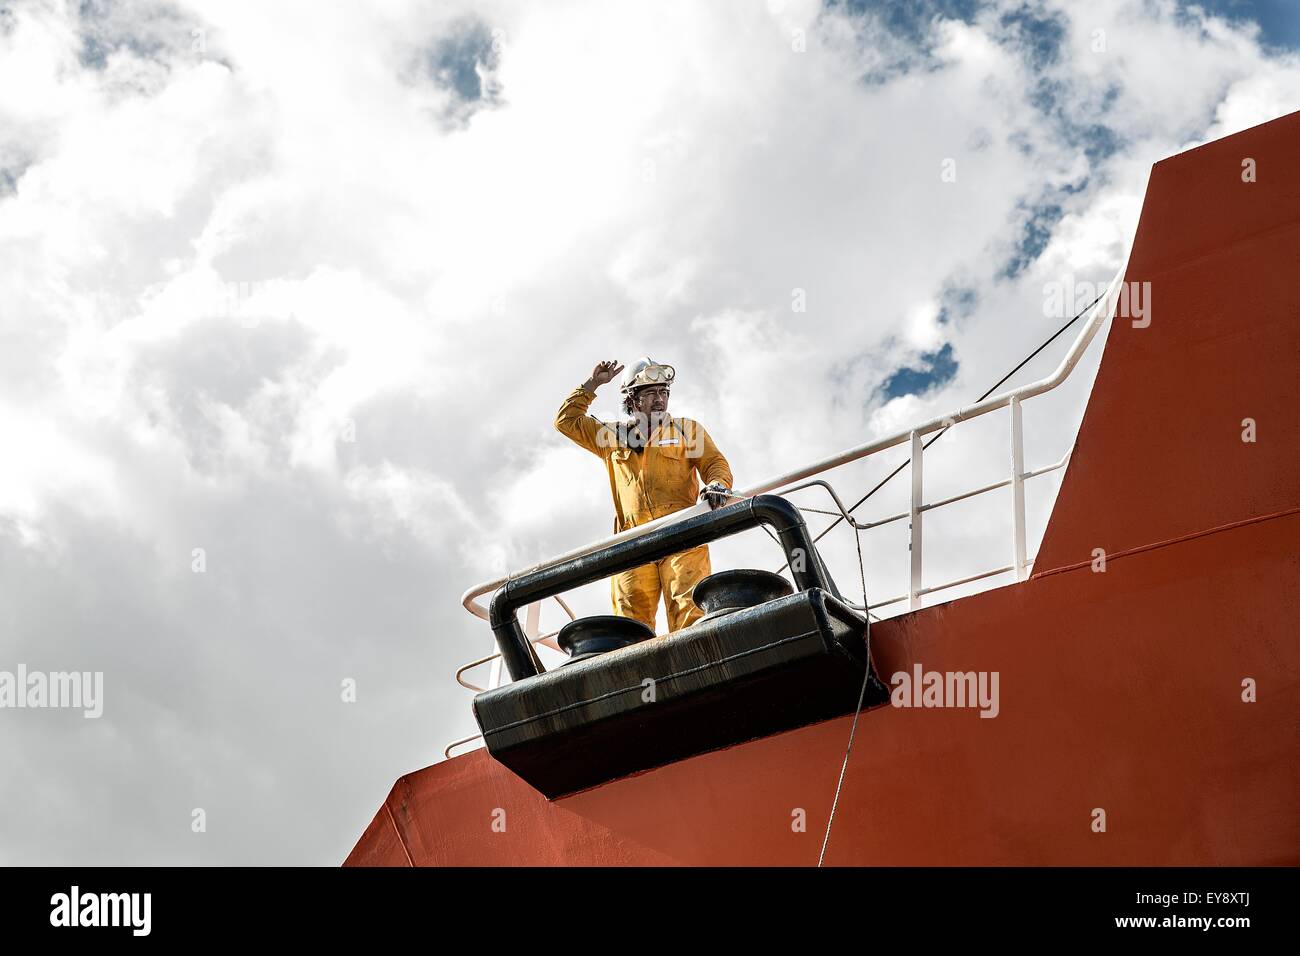 Worker mooring oil tanker on deck making hand gesture Stock Photo